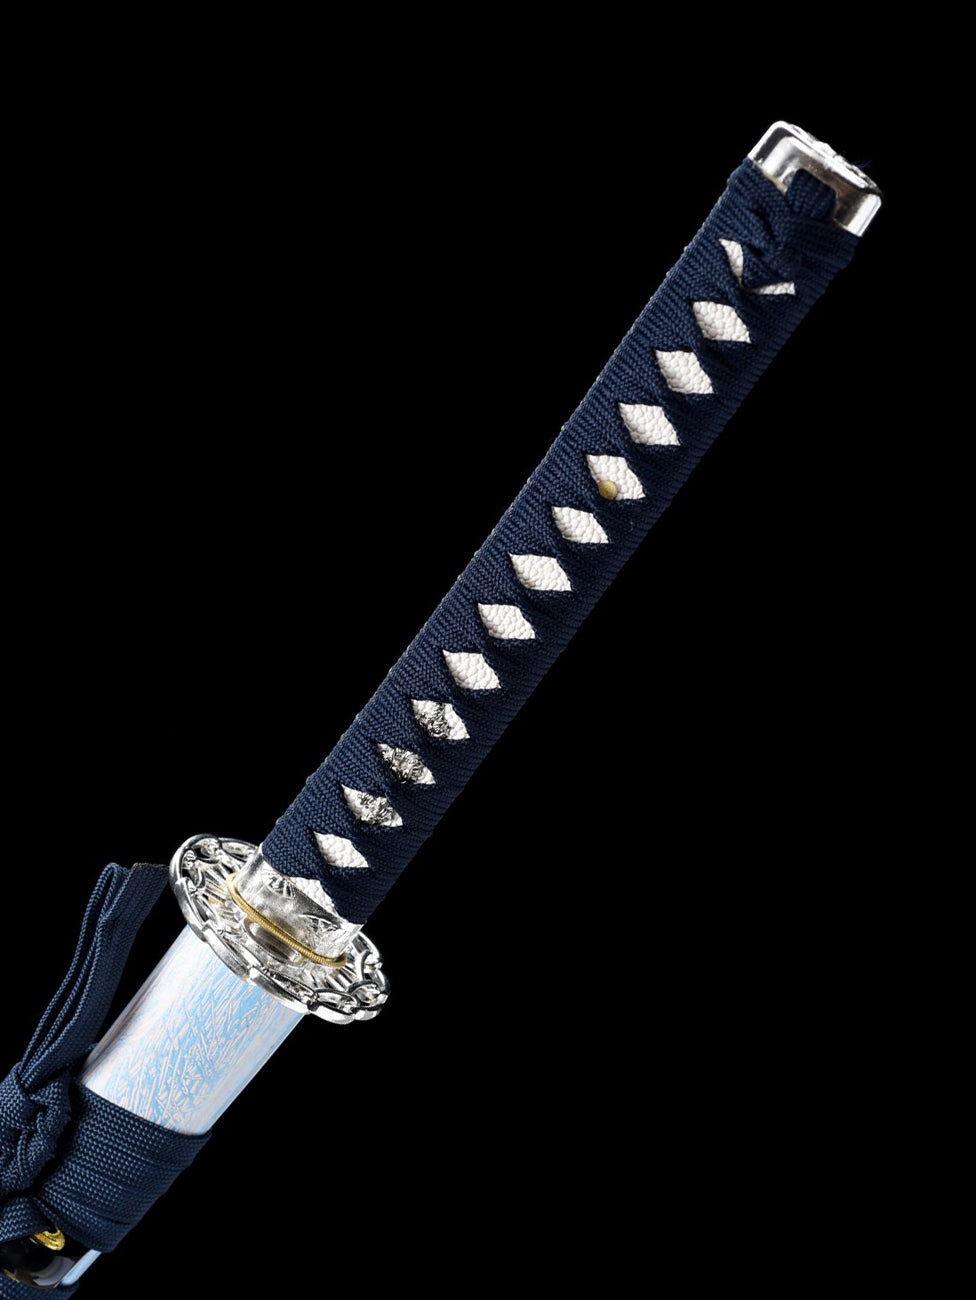 1060 steel Chain Sky katana Steel knife Japanese sword